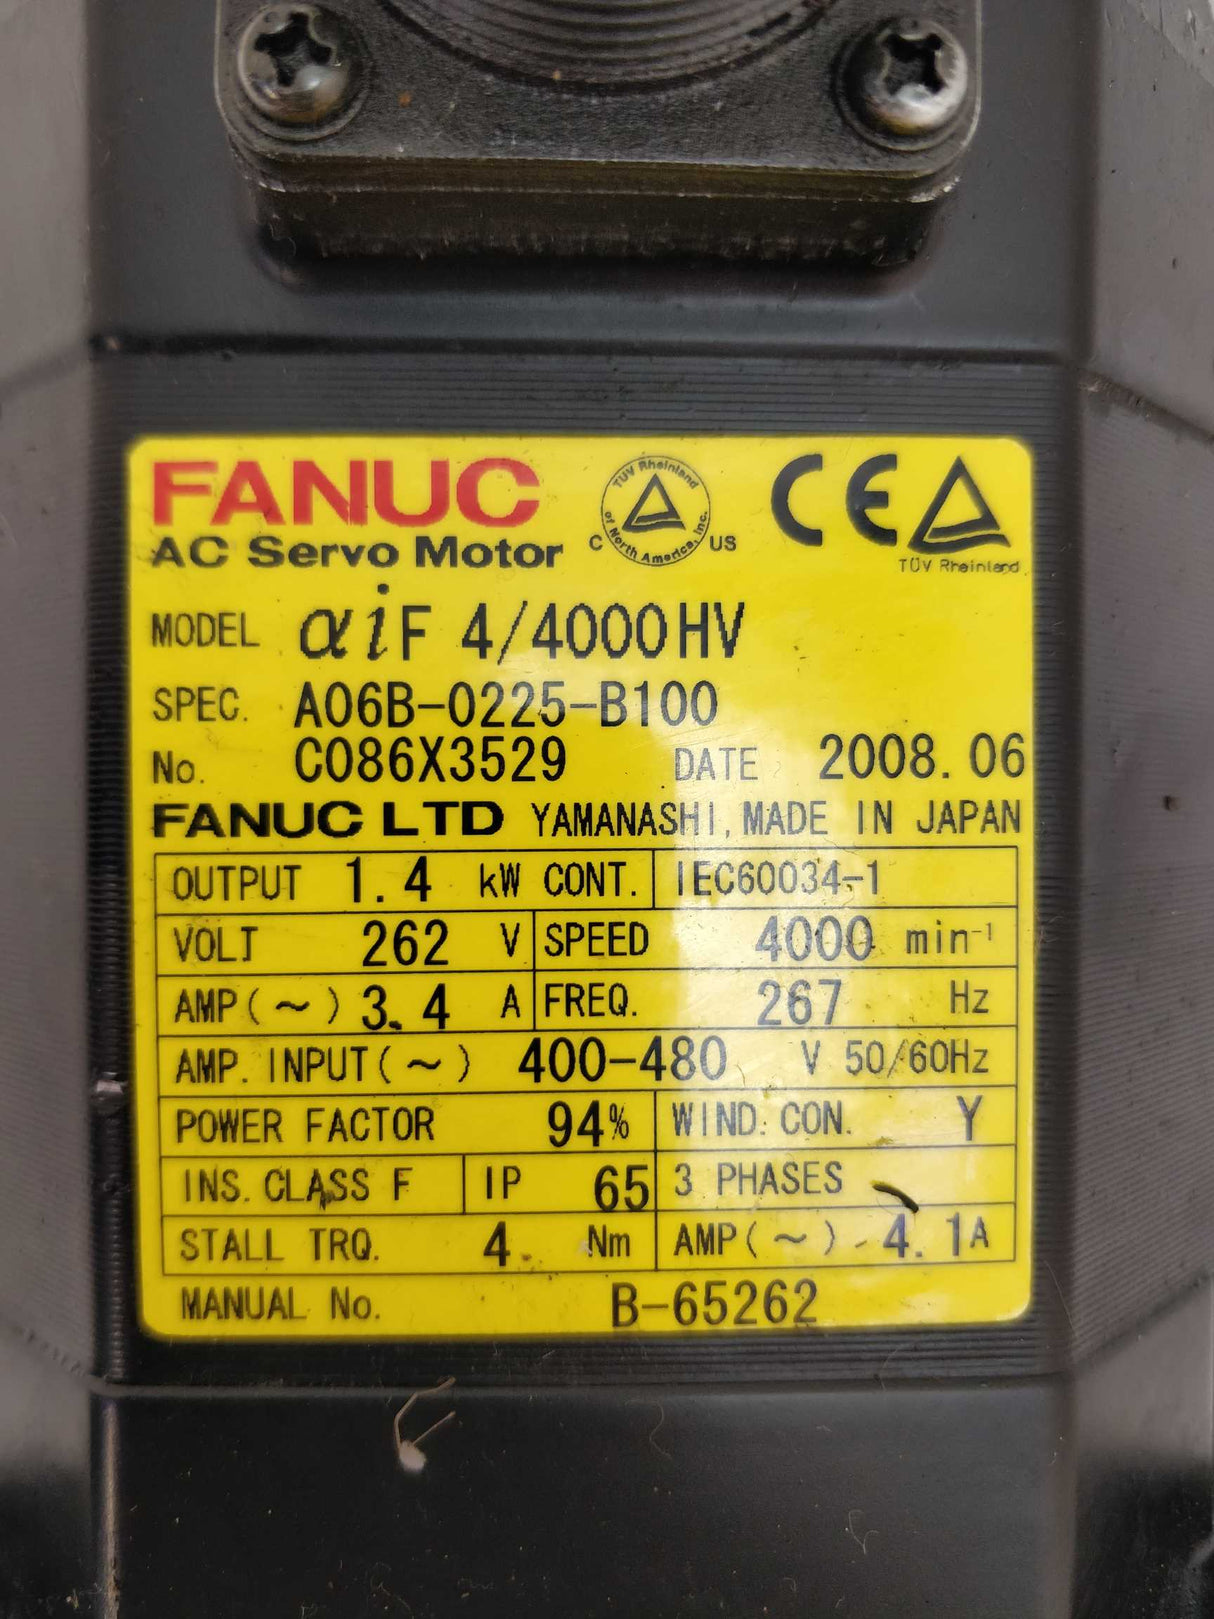 Fanuc A06B-0225-B100 aiF 4/4000HV, AC Servo Motor